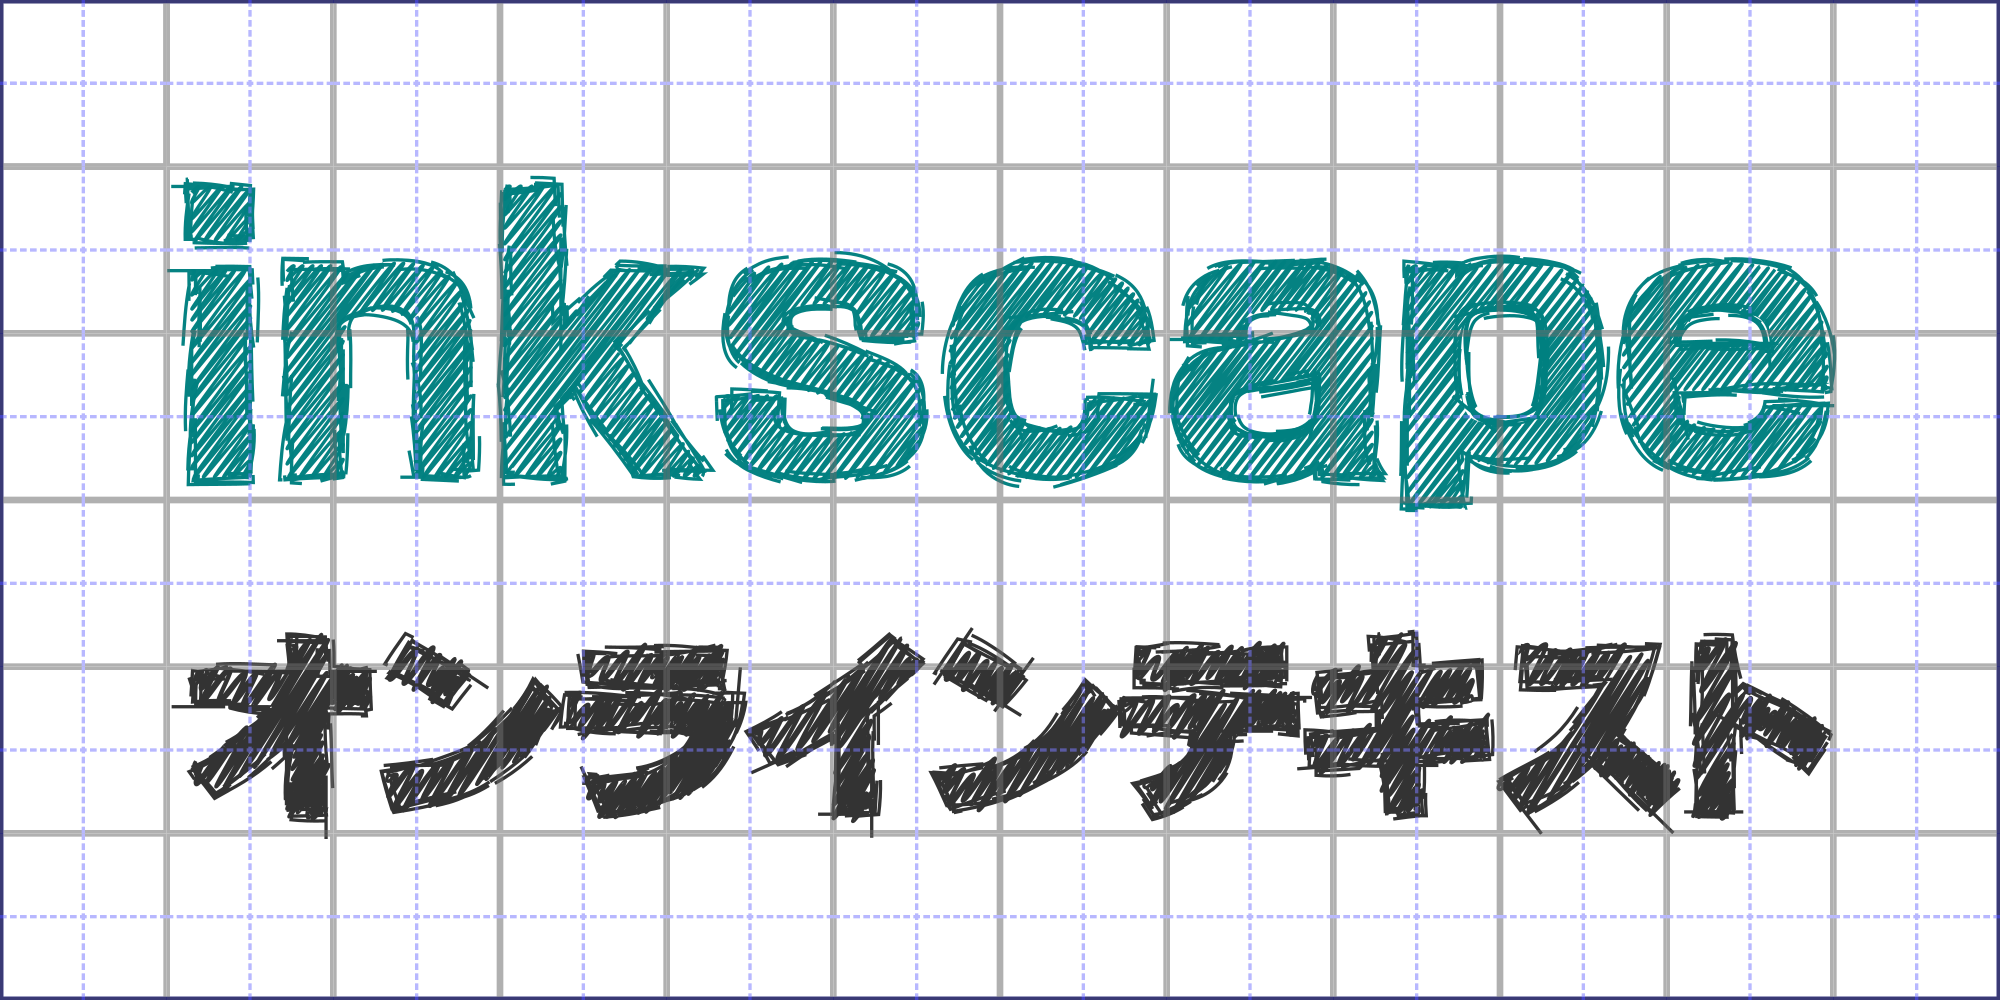 inkscapeの使い方を集めたスキルアップのための日本語チュートリアル集